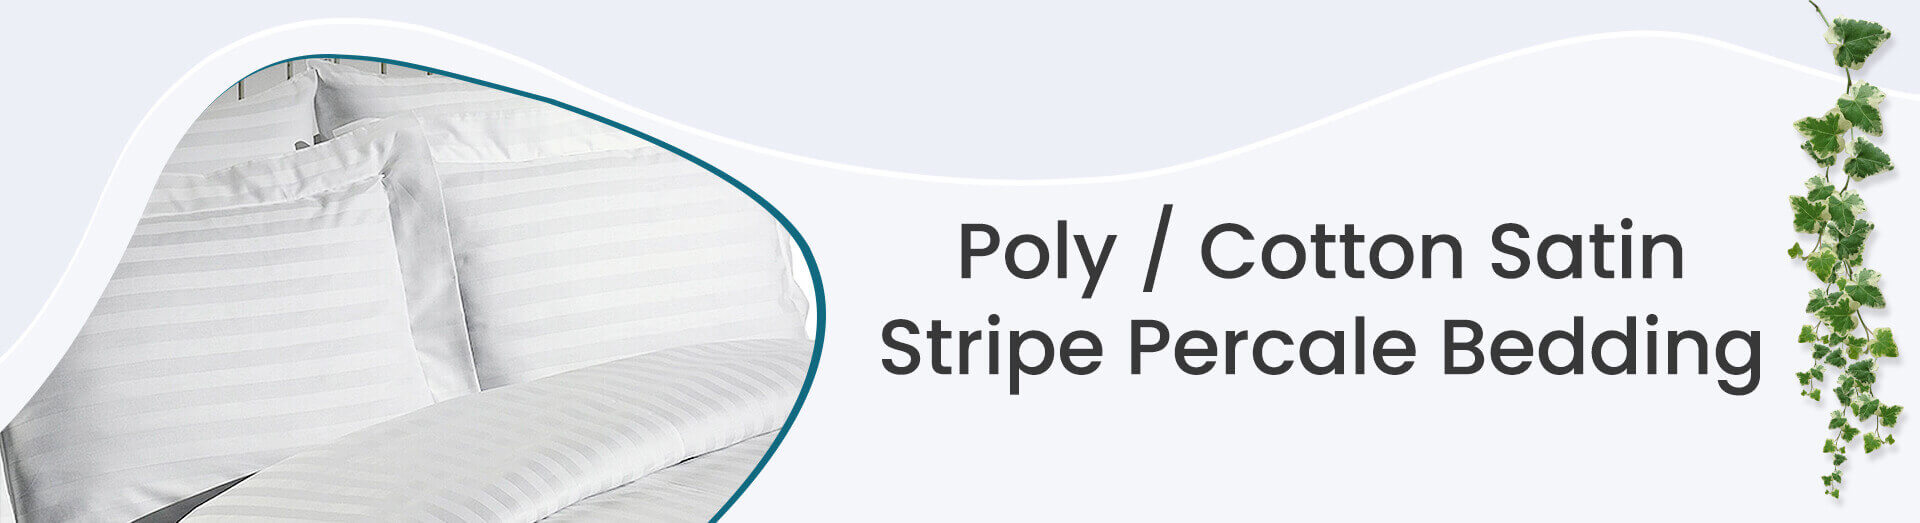 Poly / Cotton 2 cm Satin Stripe Percale Bedding